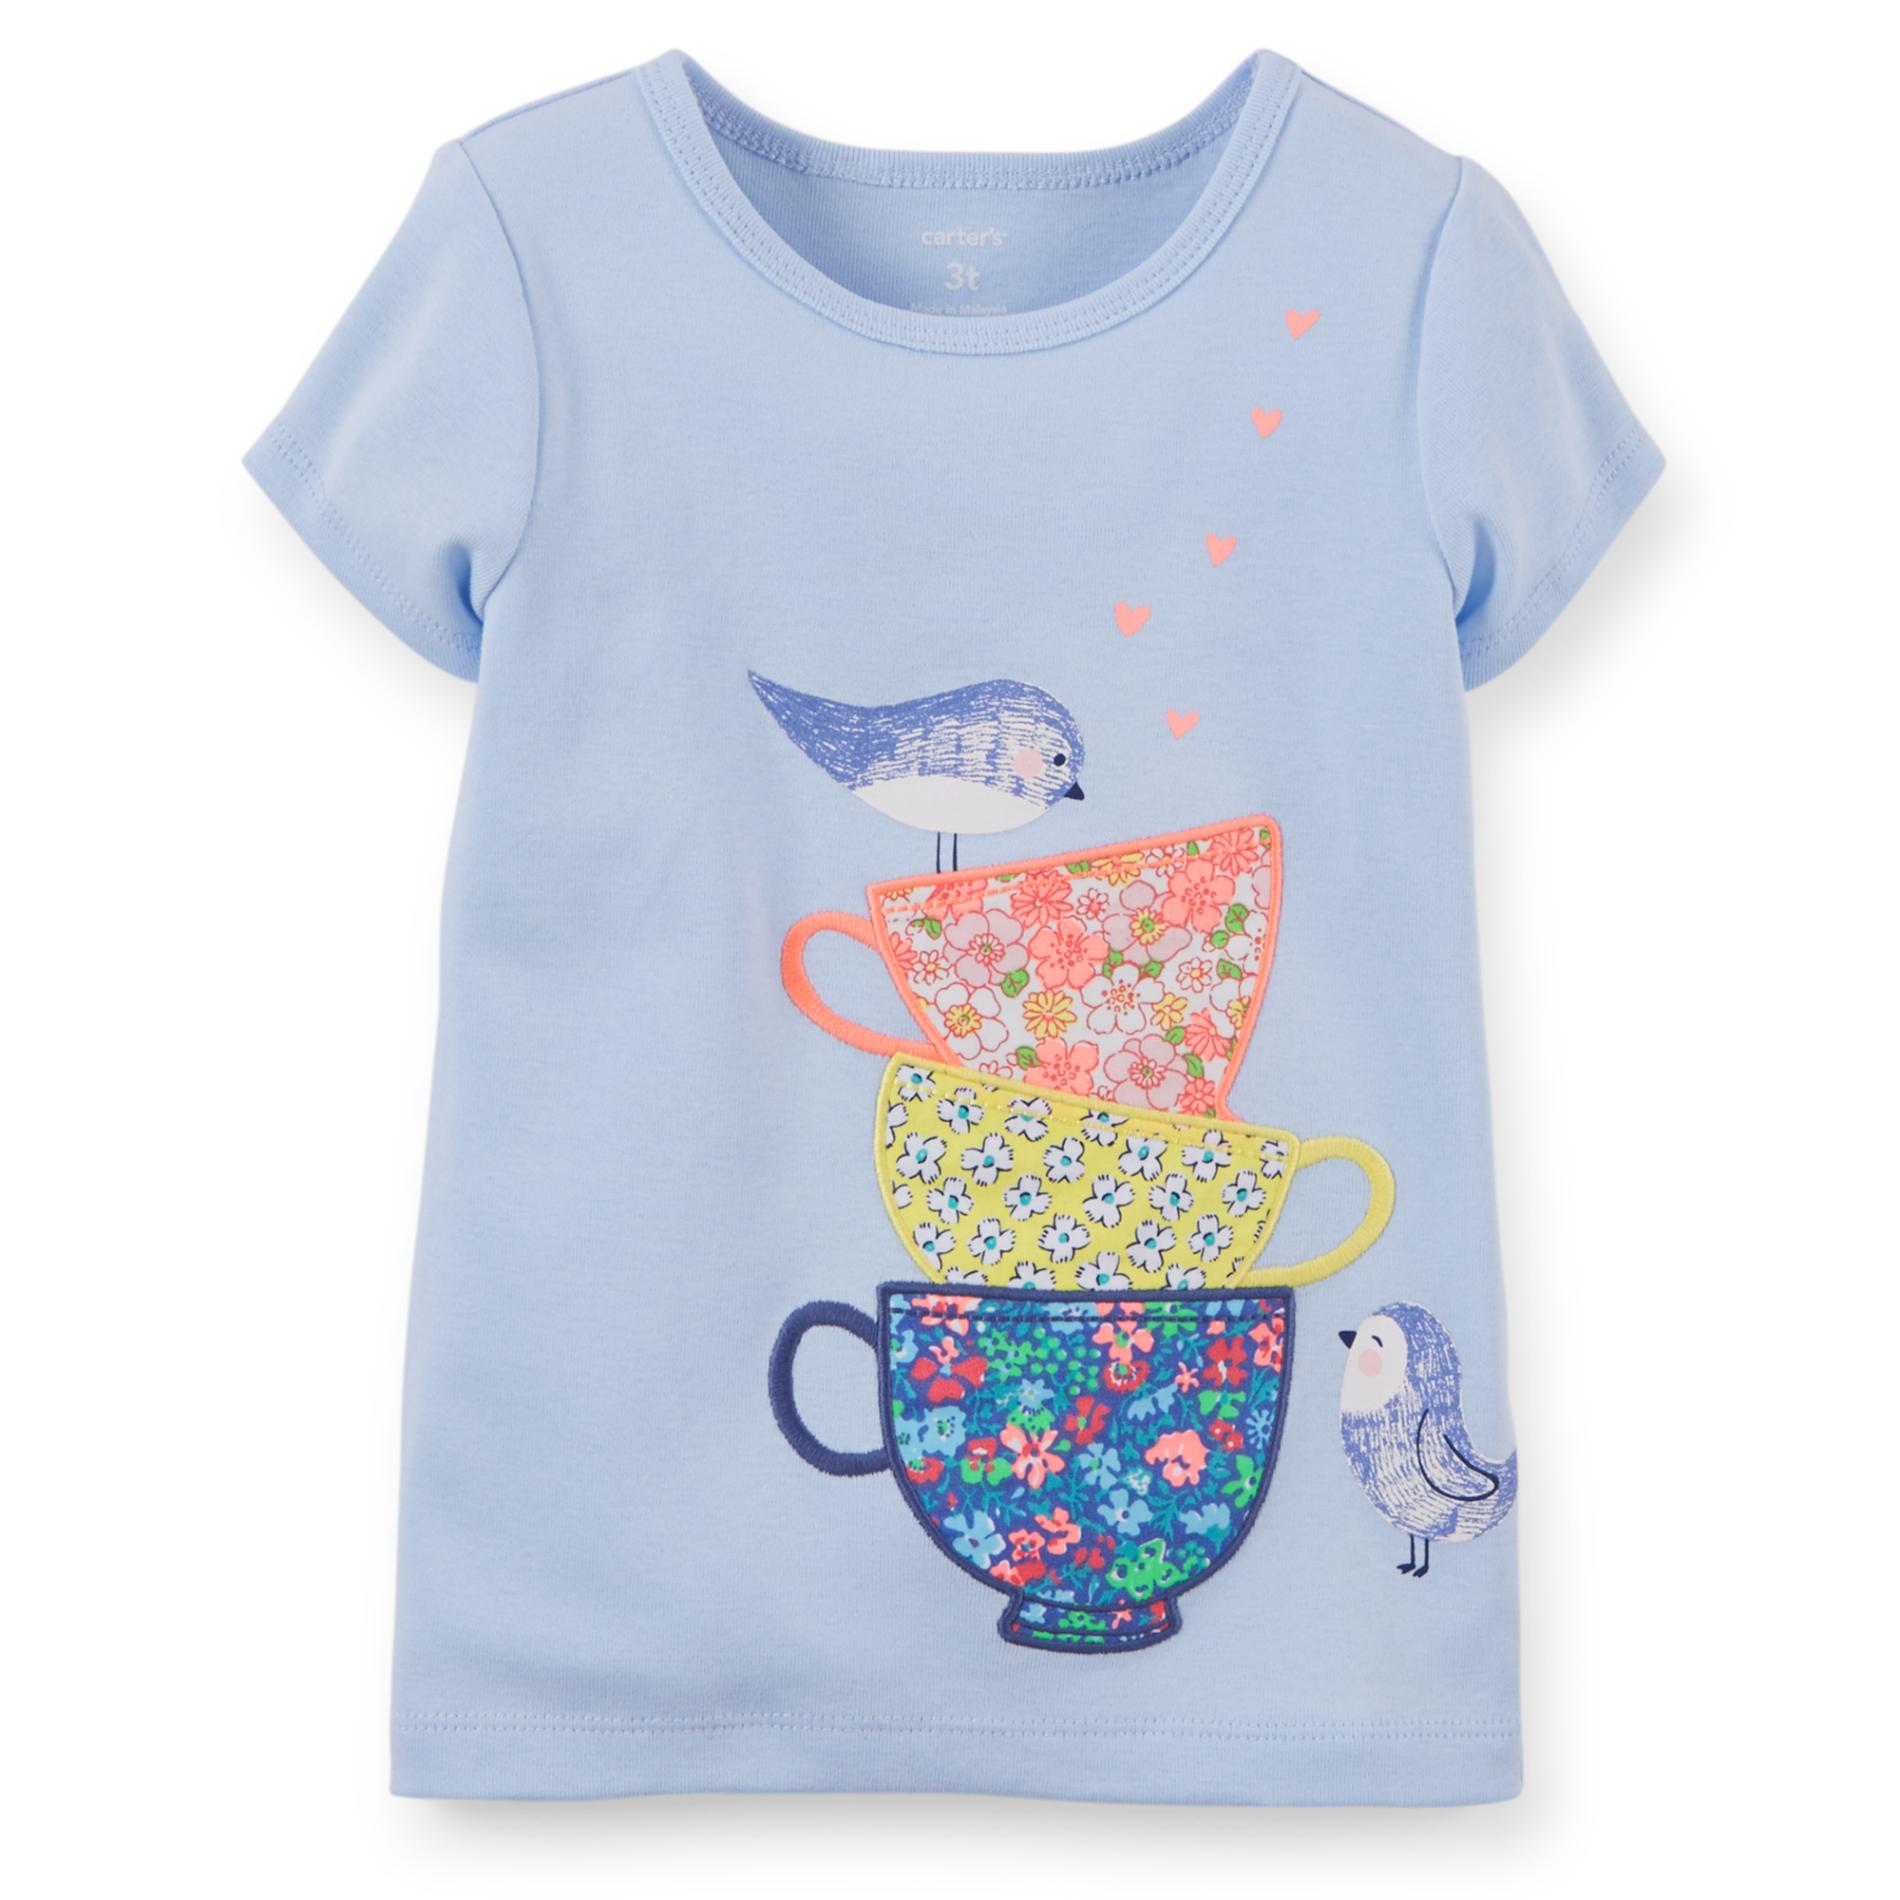 Carter's Toddler Girl's Graphic T-Shirt - Birds & Cups